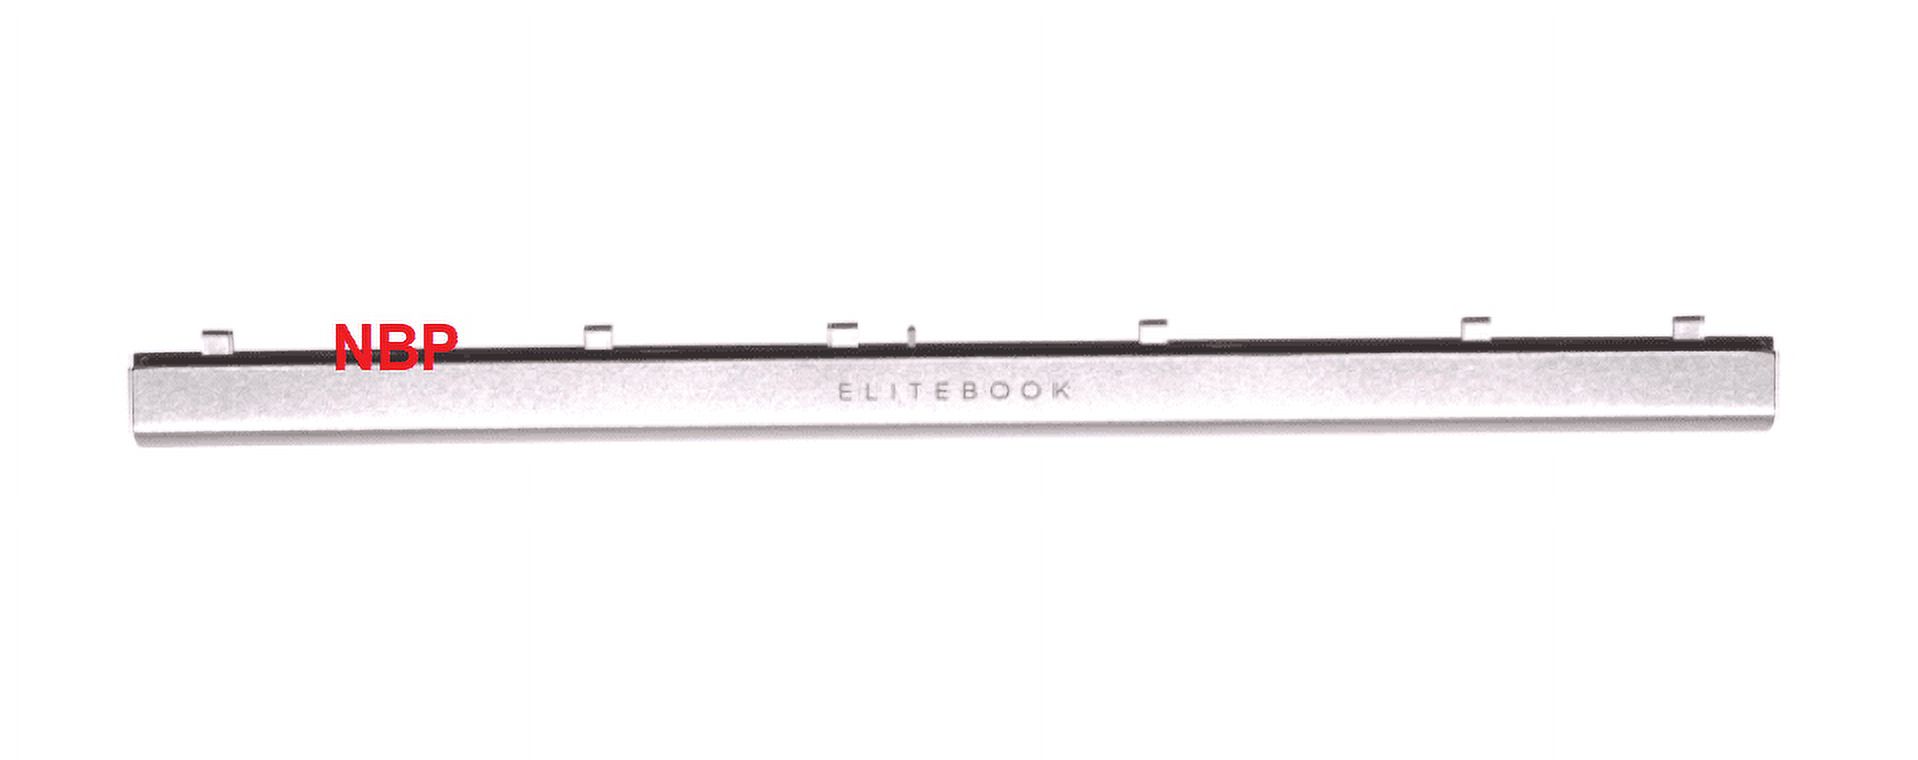 Genuine HP EliteBook 745 840 G5 14" LCD Center Hinge Strip L15503-001 - image 1 of 1